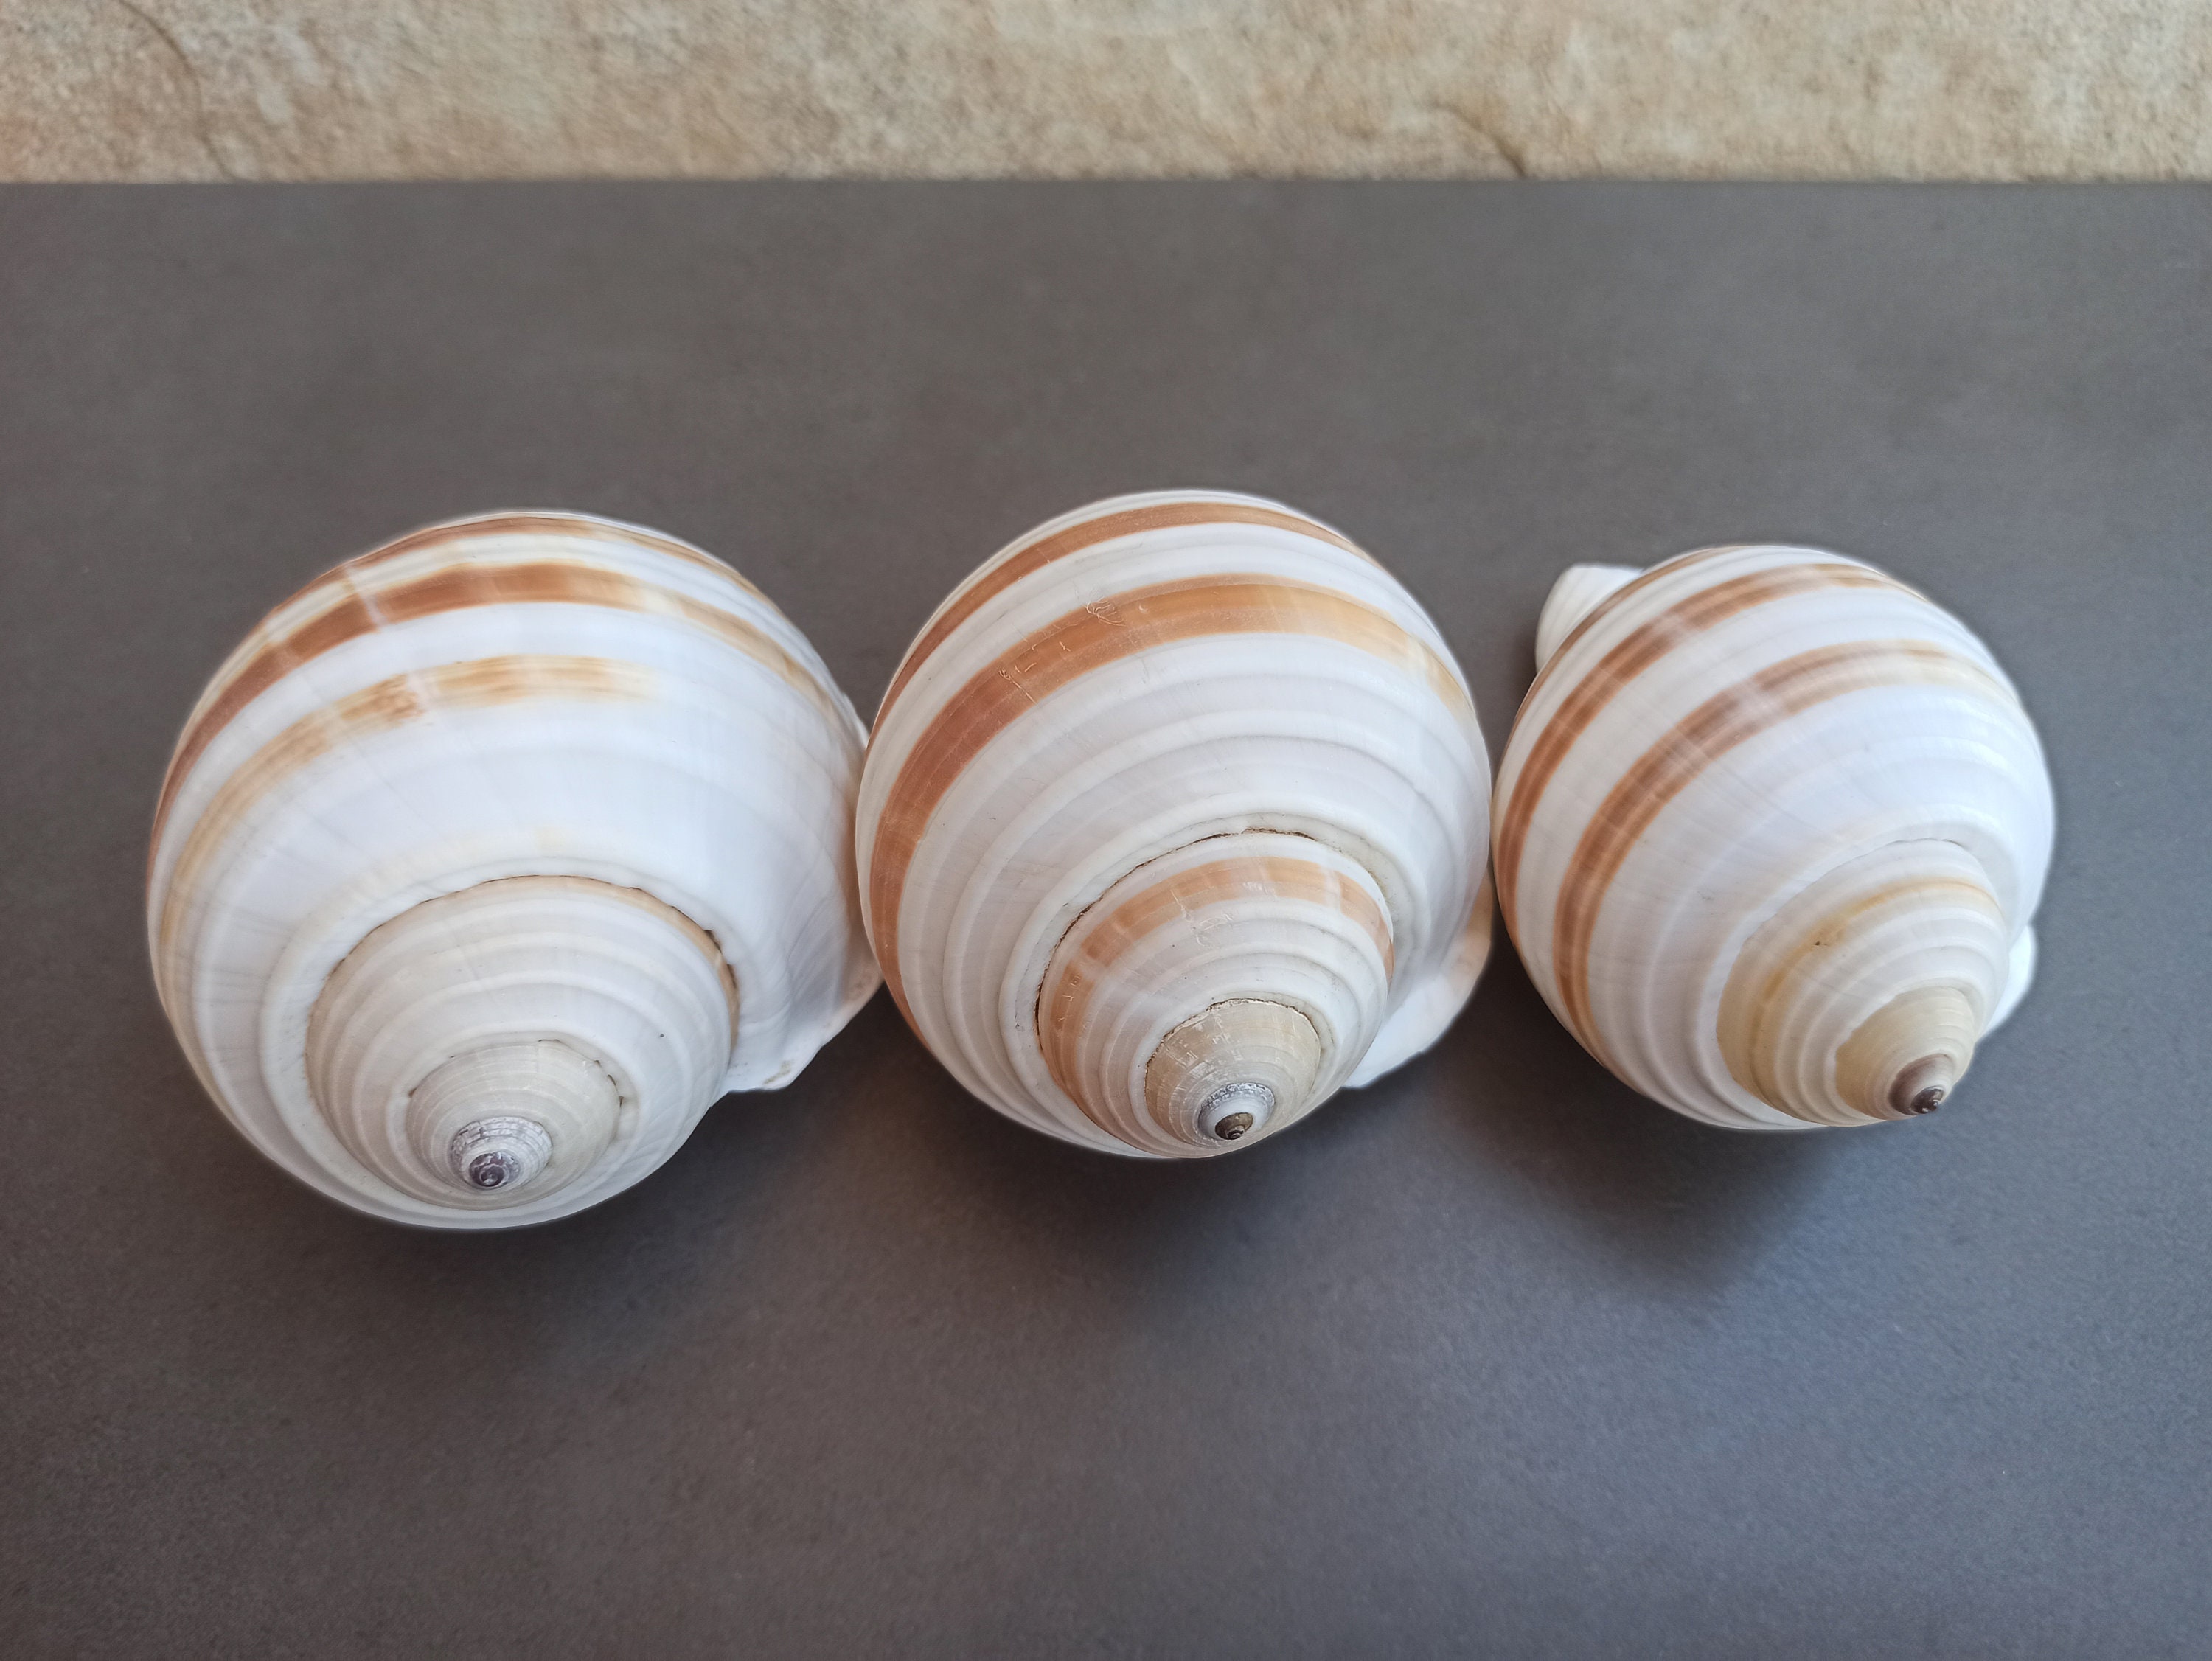 Northern moon Shells For Crafts Art Decor Natural Sea Shell 10 pcs